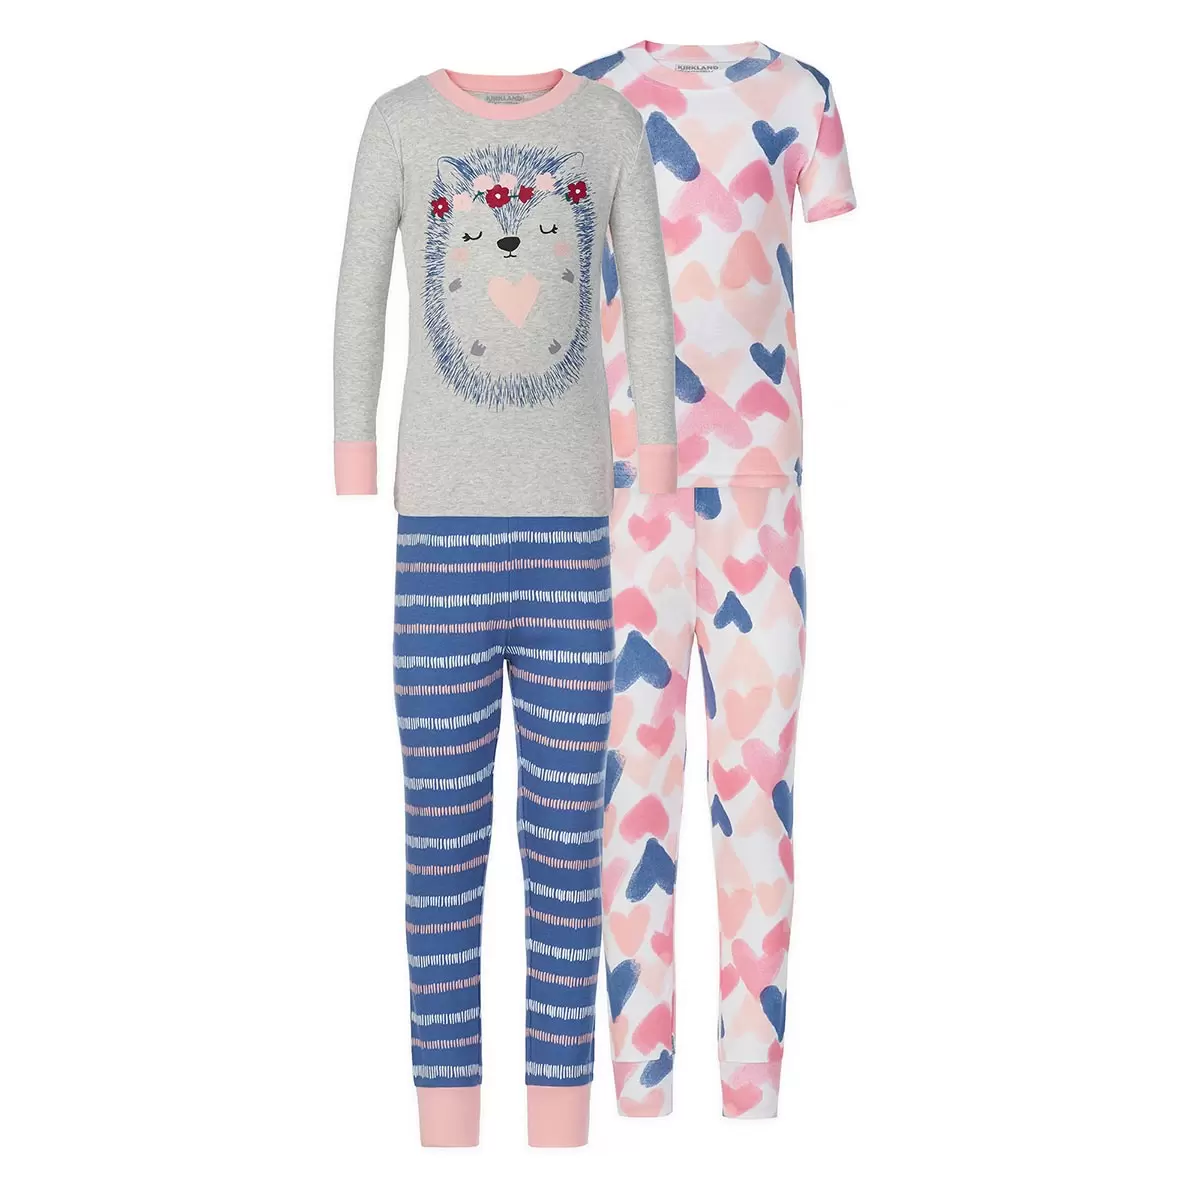 Kirkland Signature Children's Cotton 4 Piece Pyjama Set in Hedgehog